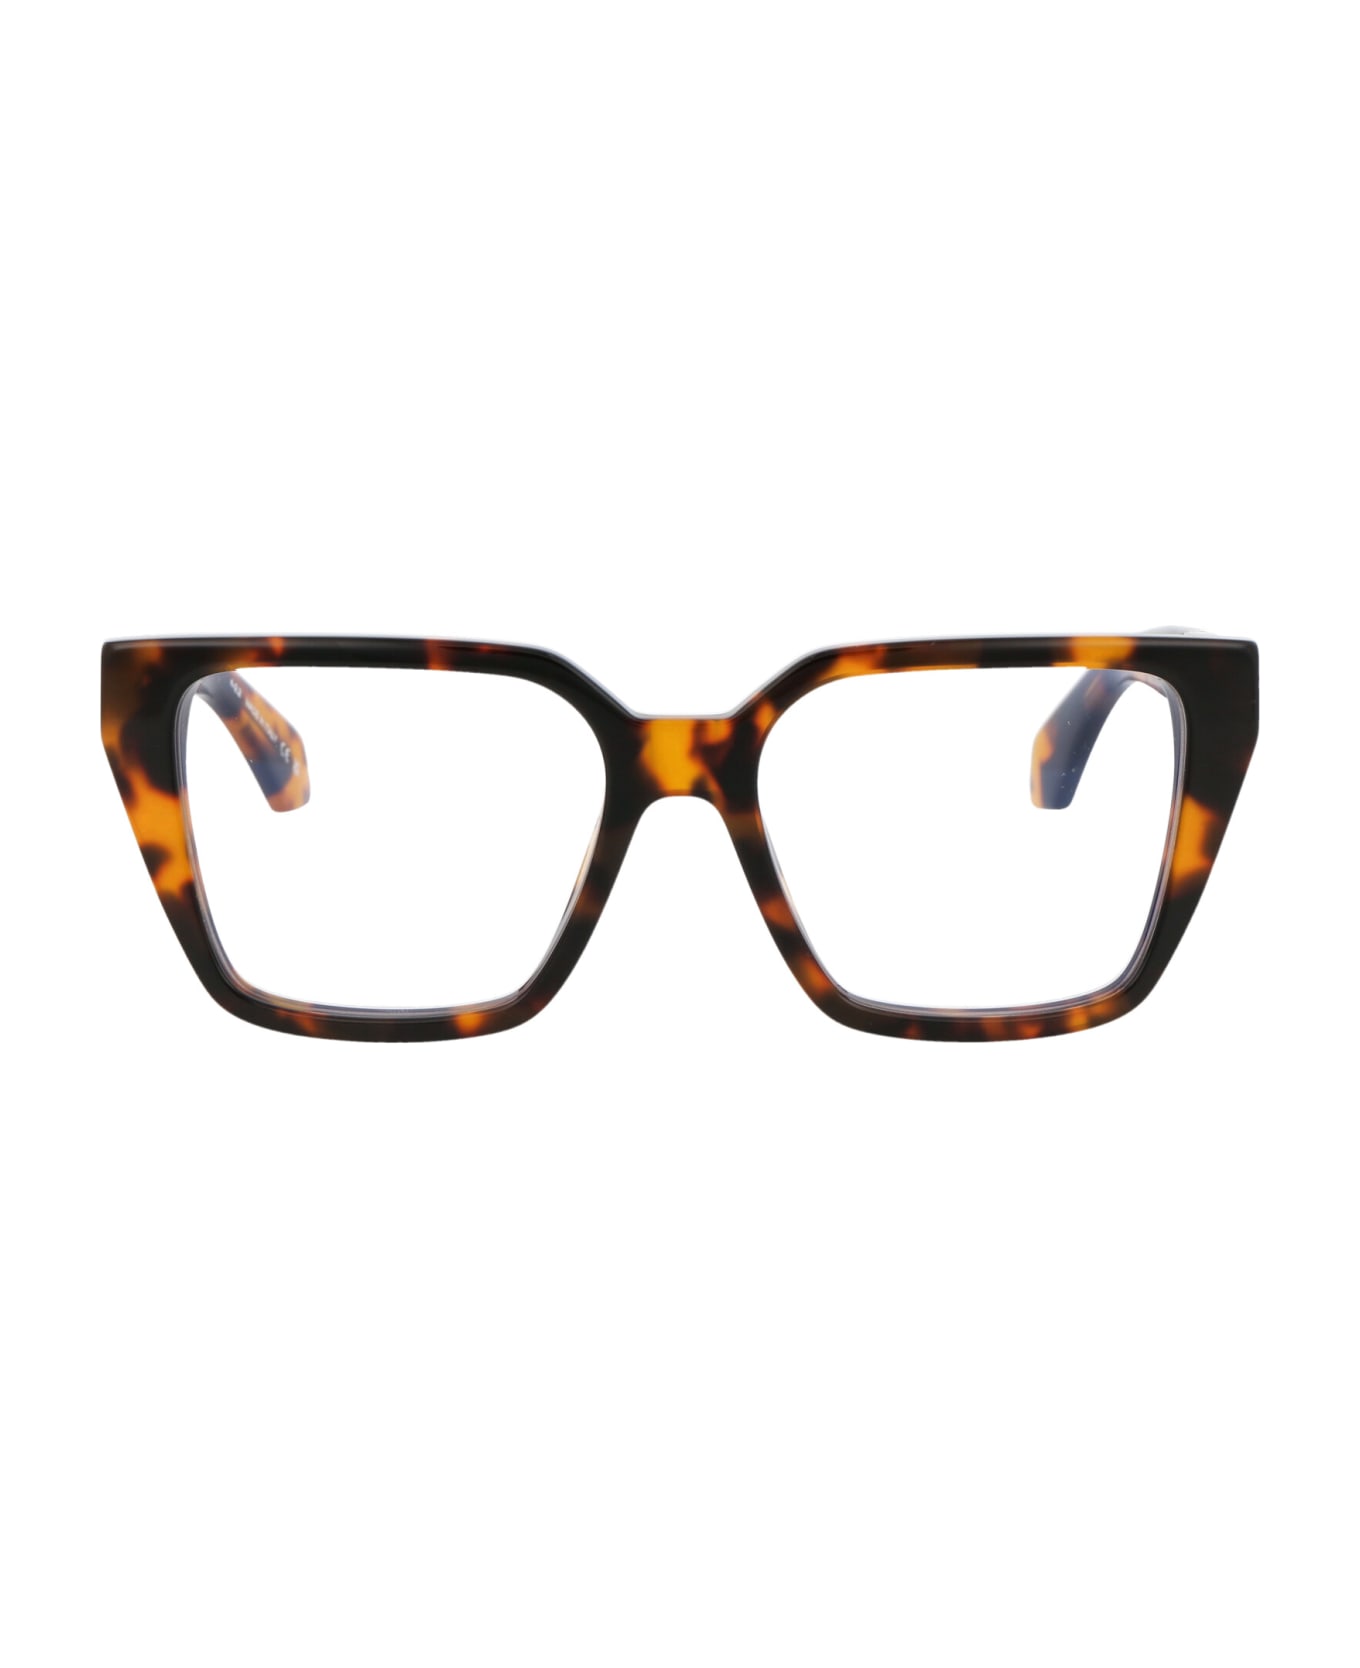 Off-White Optical Style 29 Glasses - 6000 HAVANA BLUE BLOCK